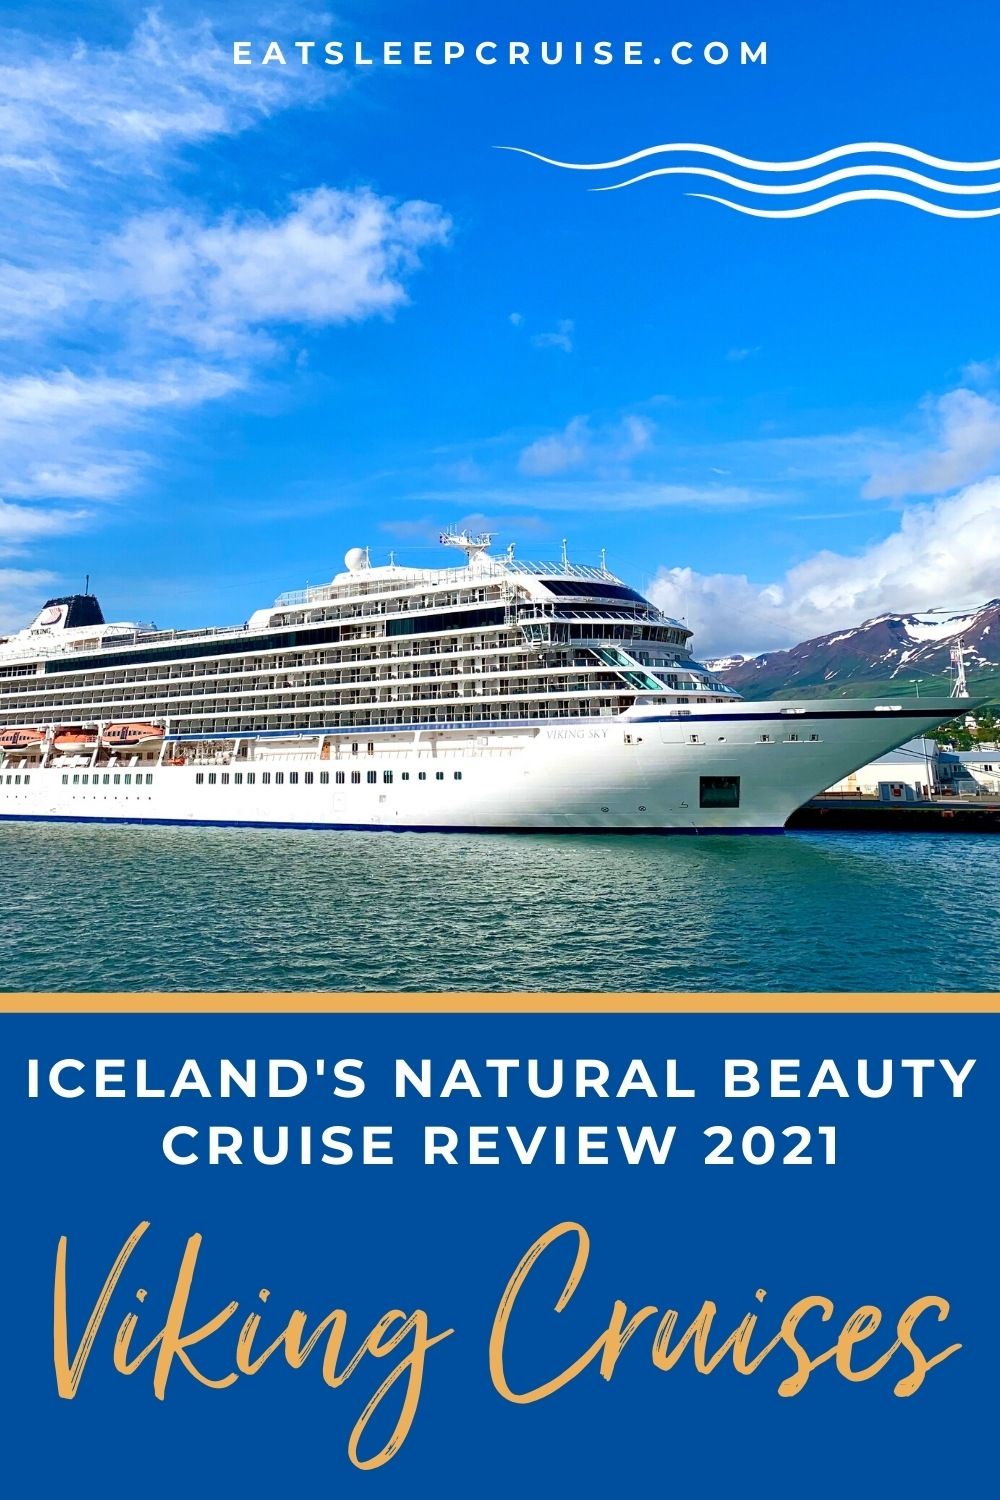 Viking Cruise Review 2021